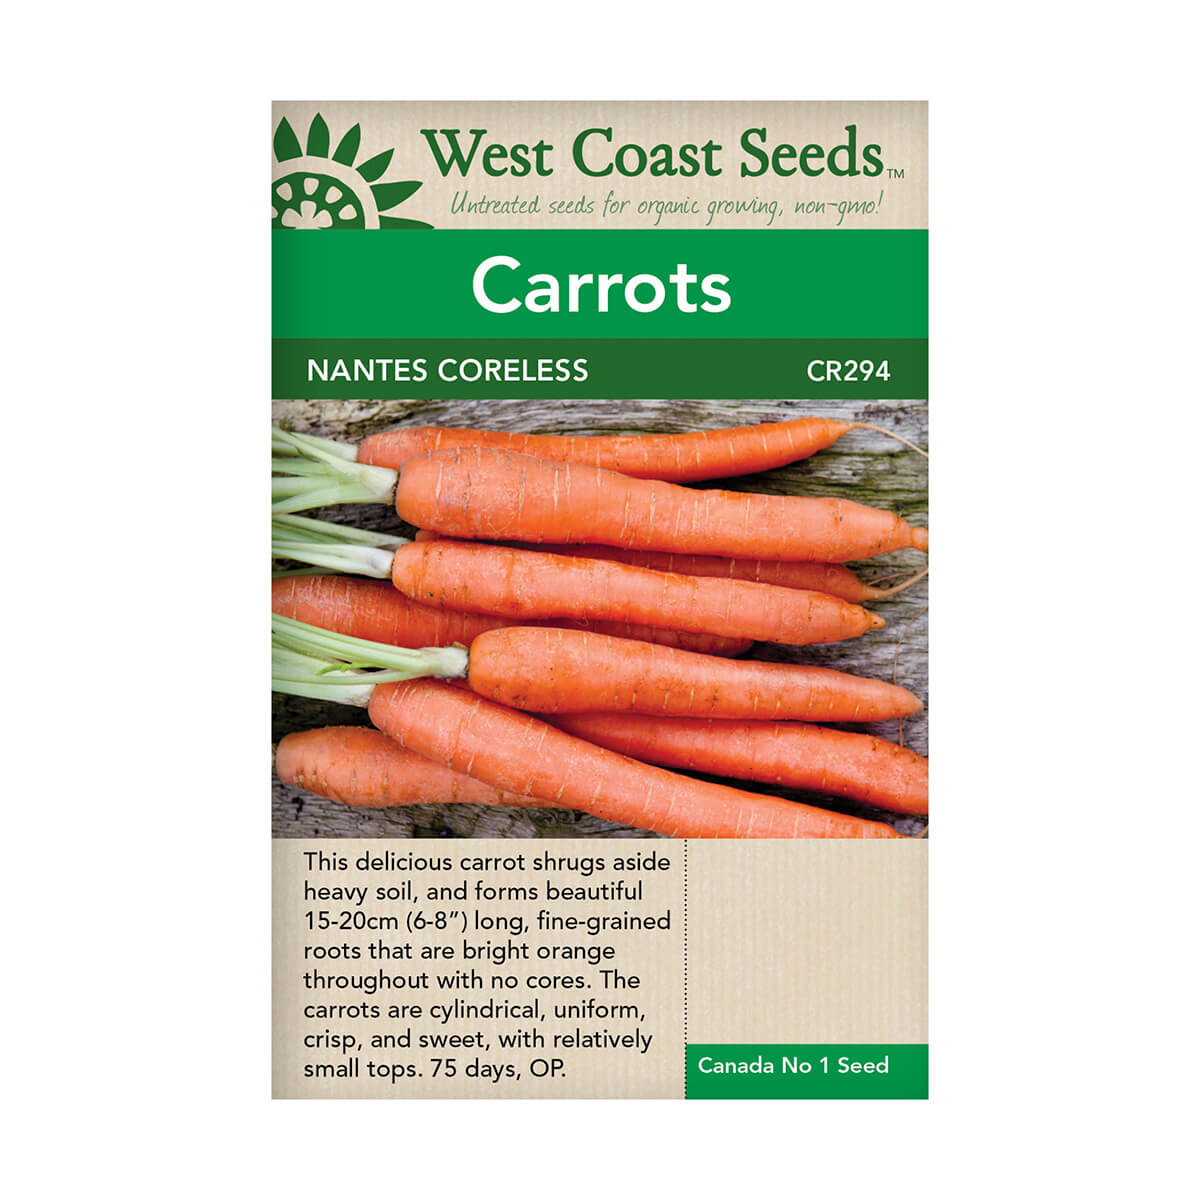 Nantes Coreless Carrot Seeds - approx. 840 seeds